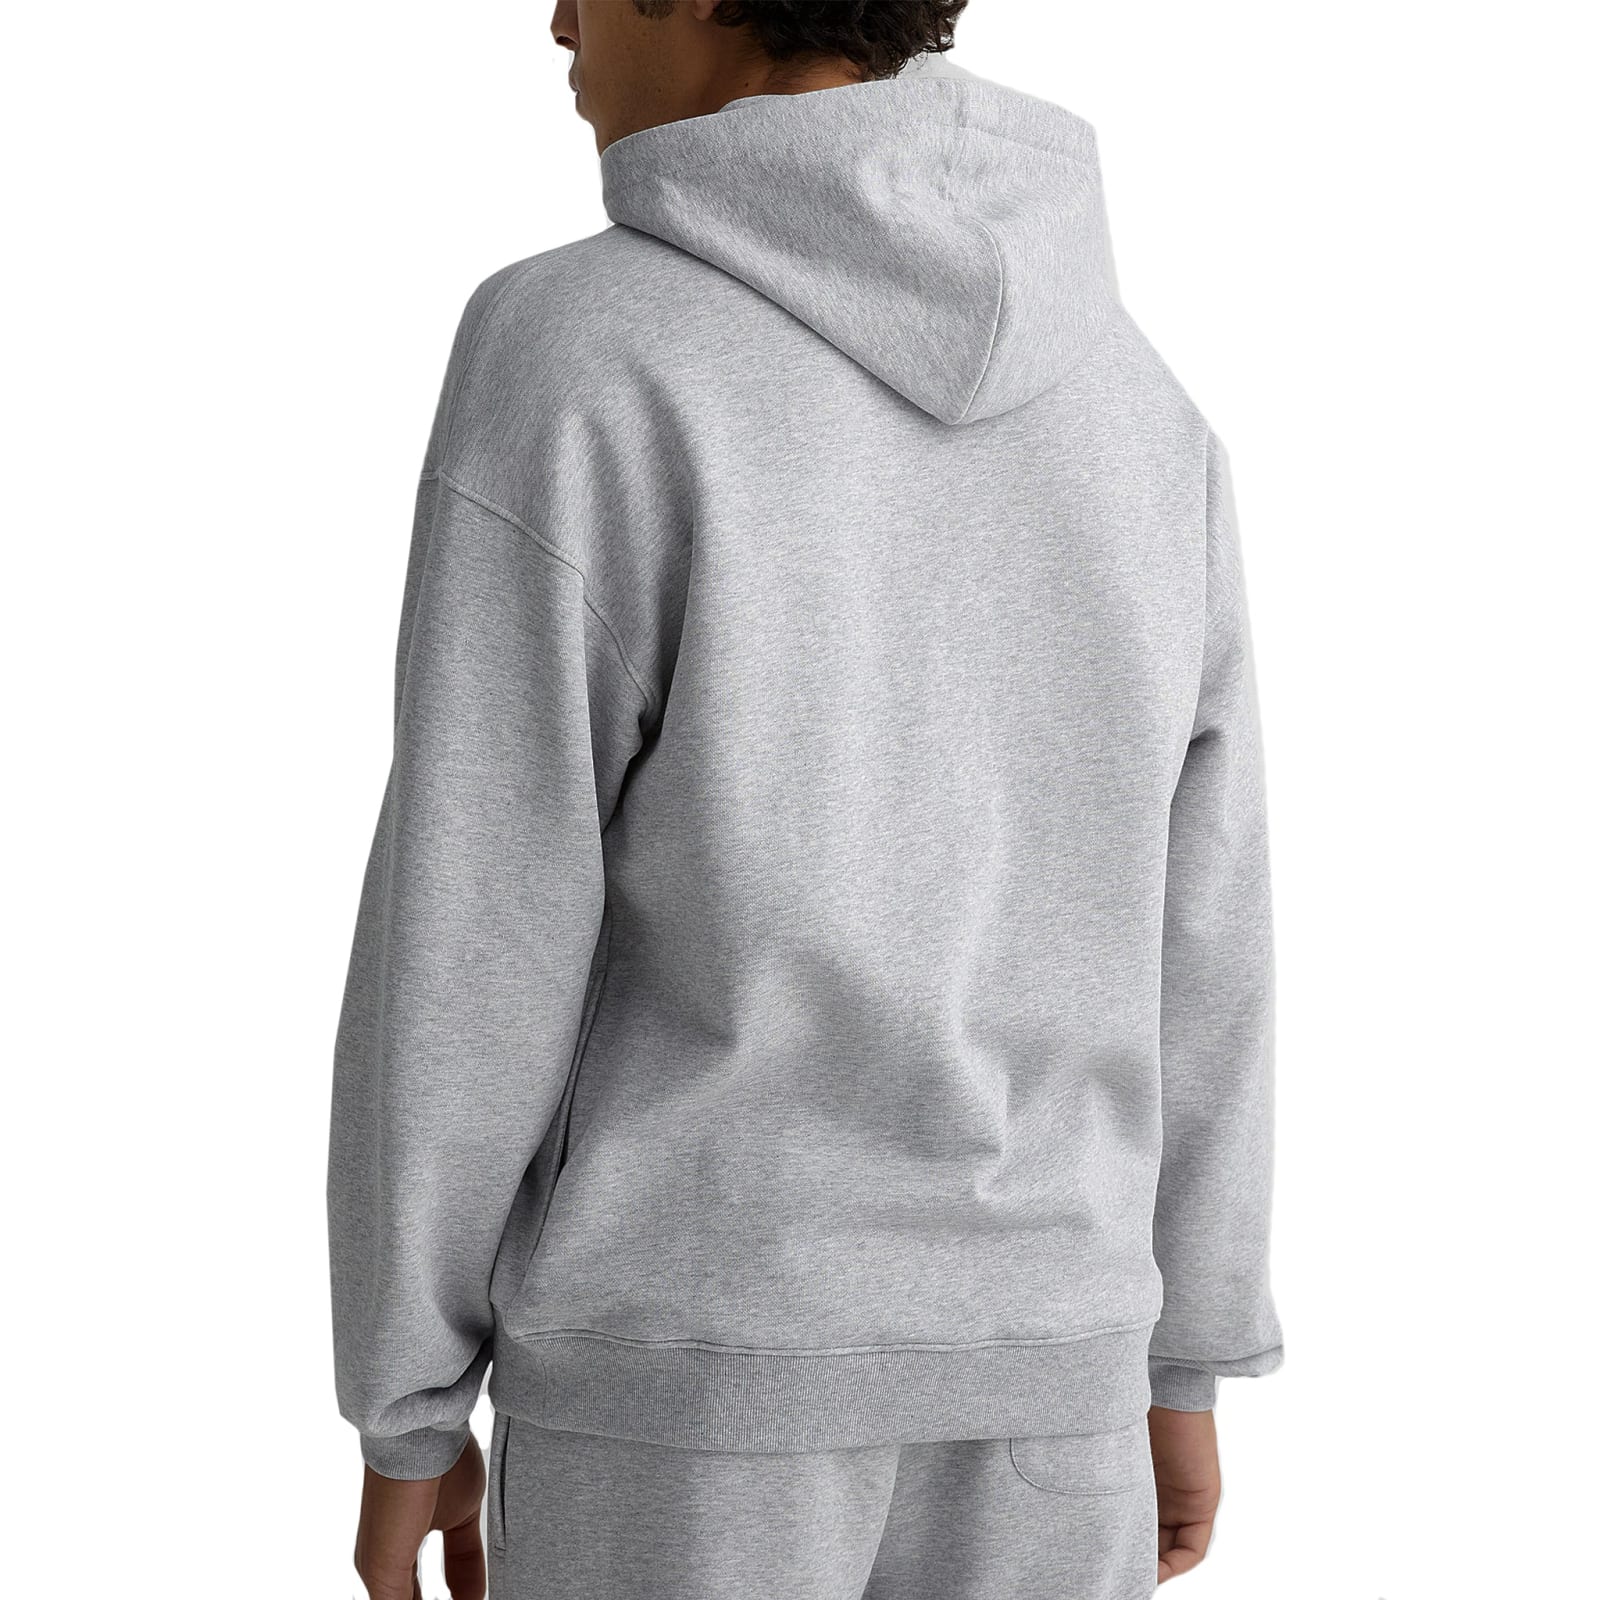 Shop Moschino Couture Logo Hooded Sweatshirt In Gray